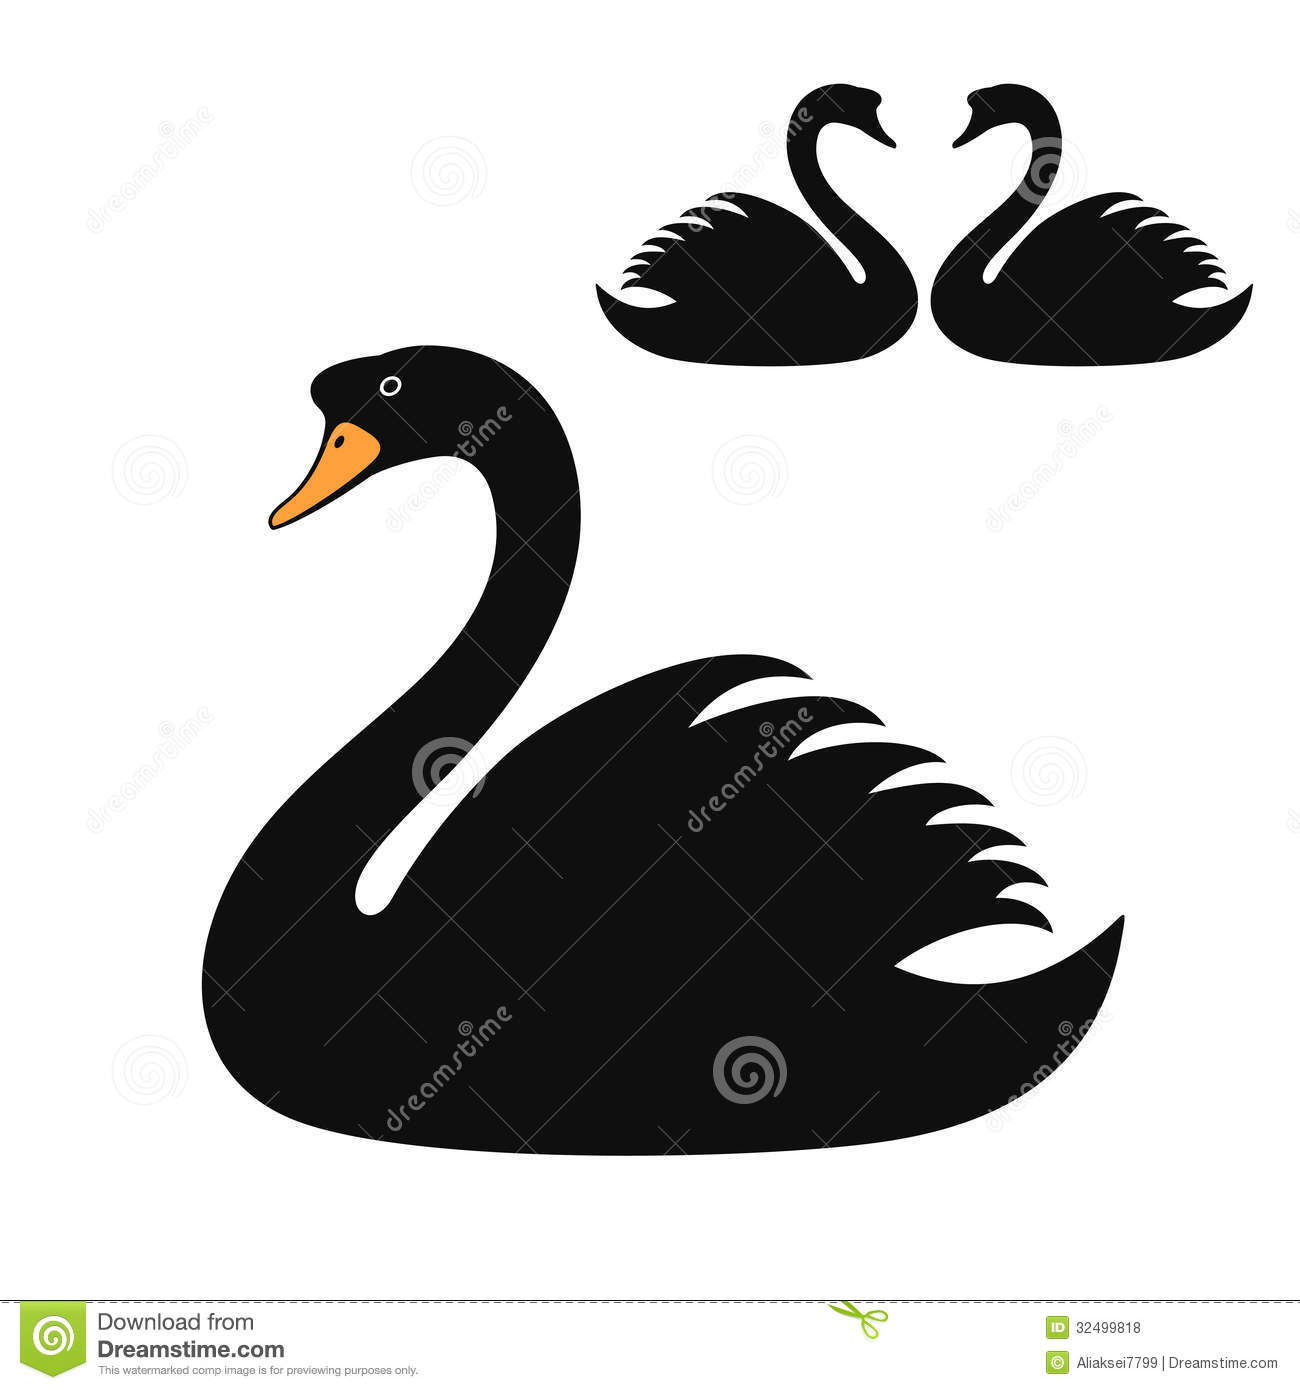 Black Swan clipart #19, Download drawings